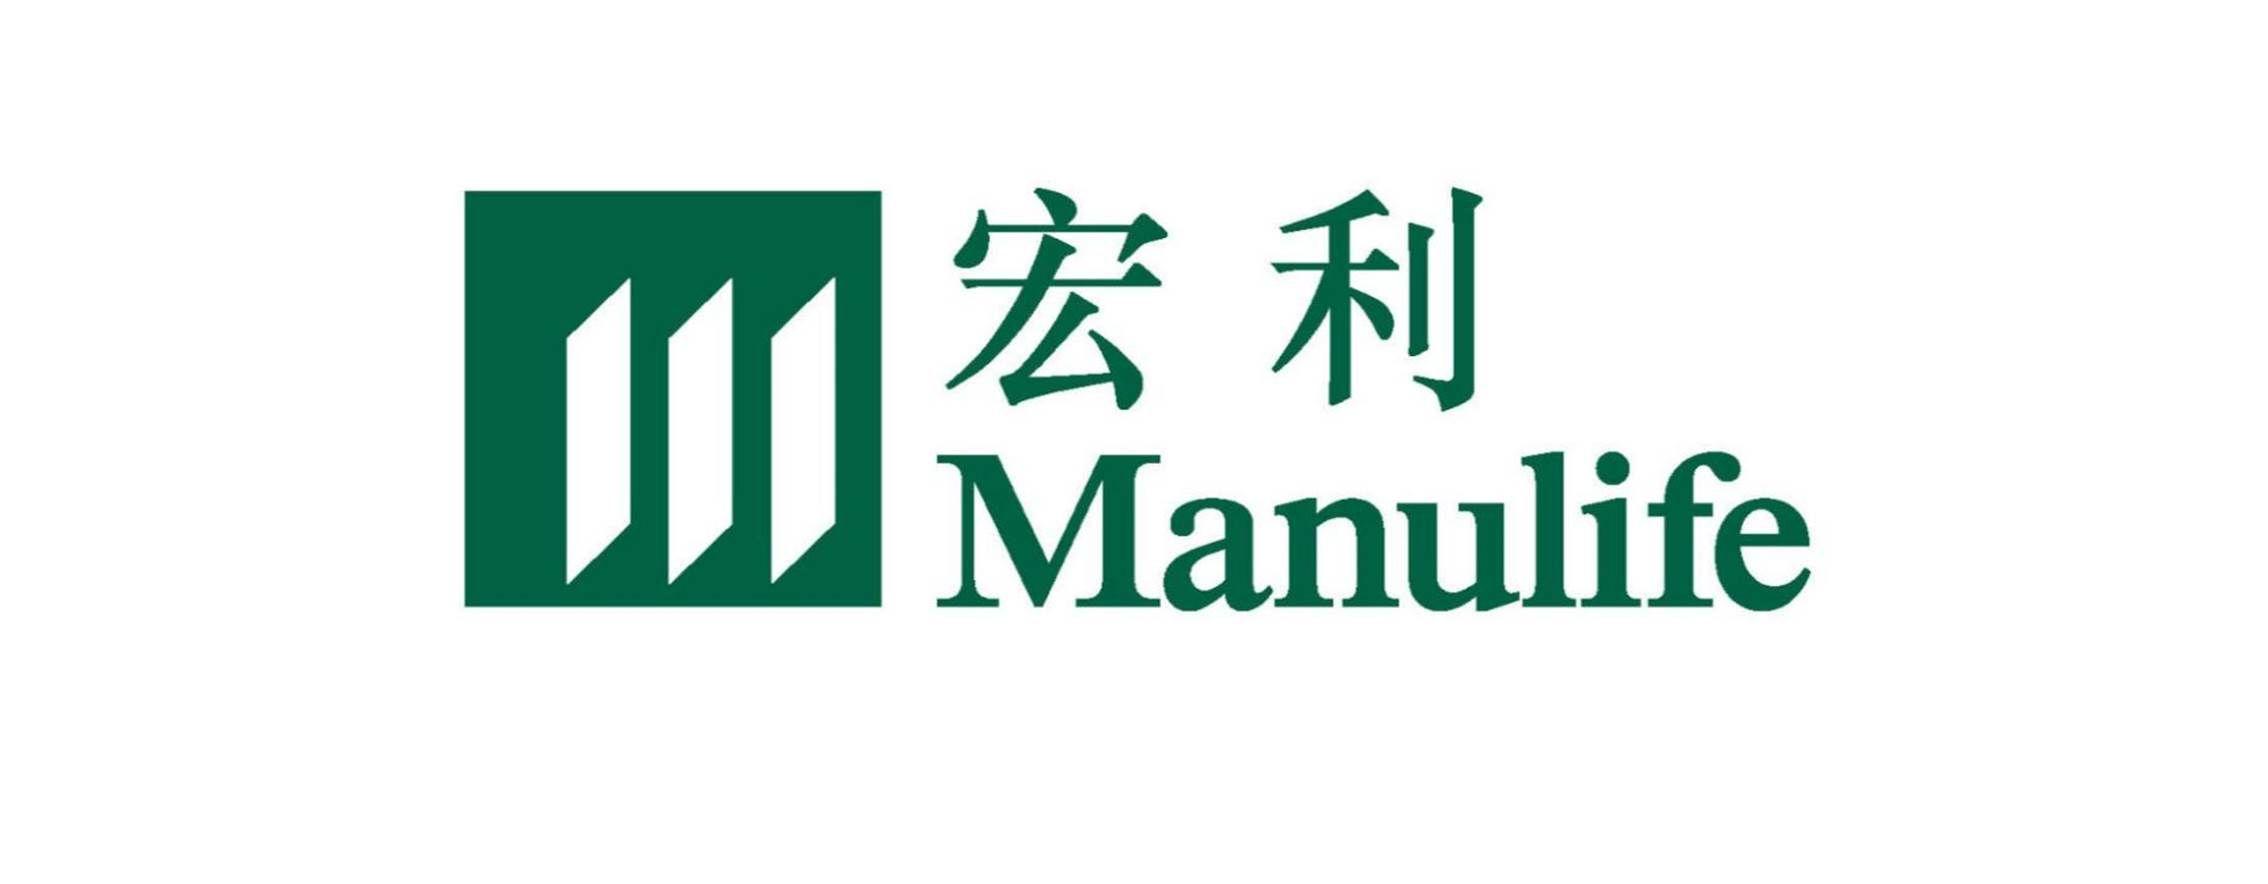 Manulife Logo - Manulife (International) Limited